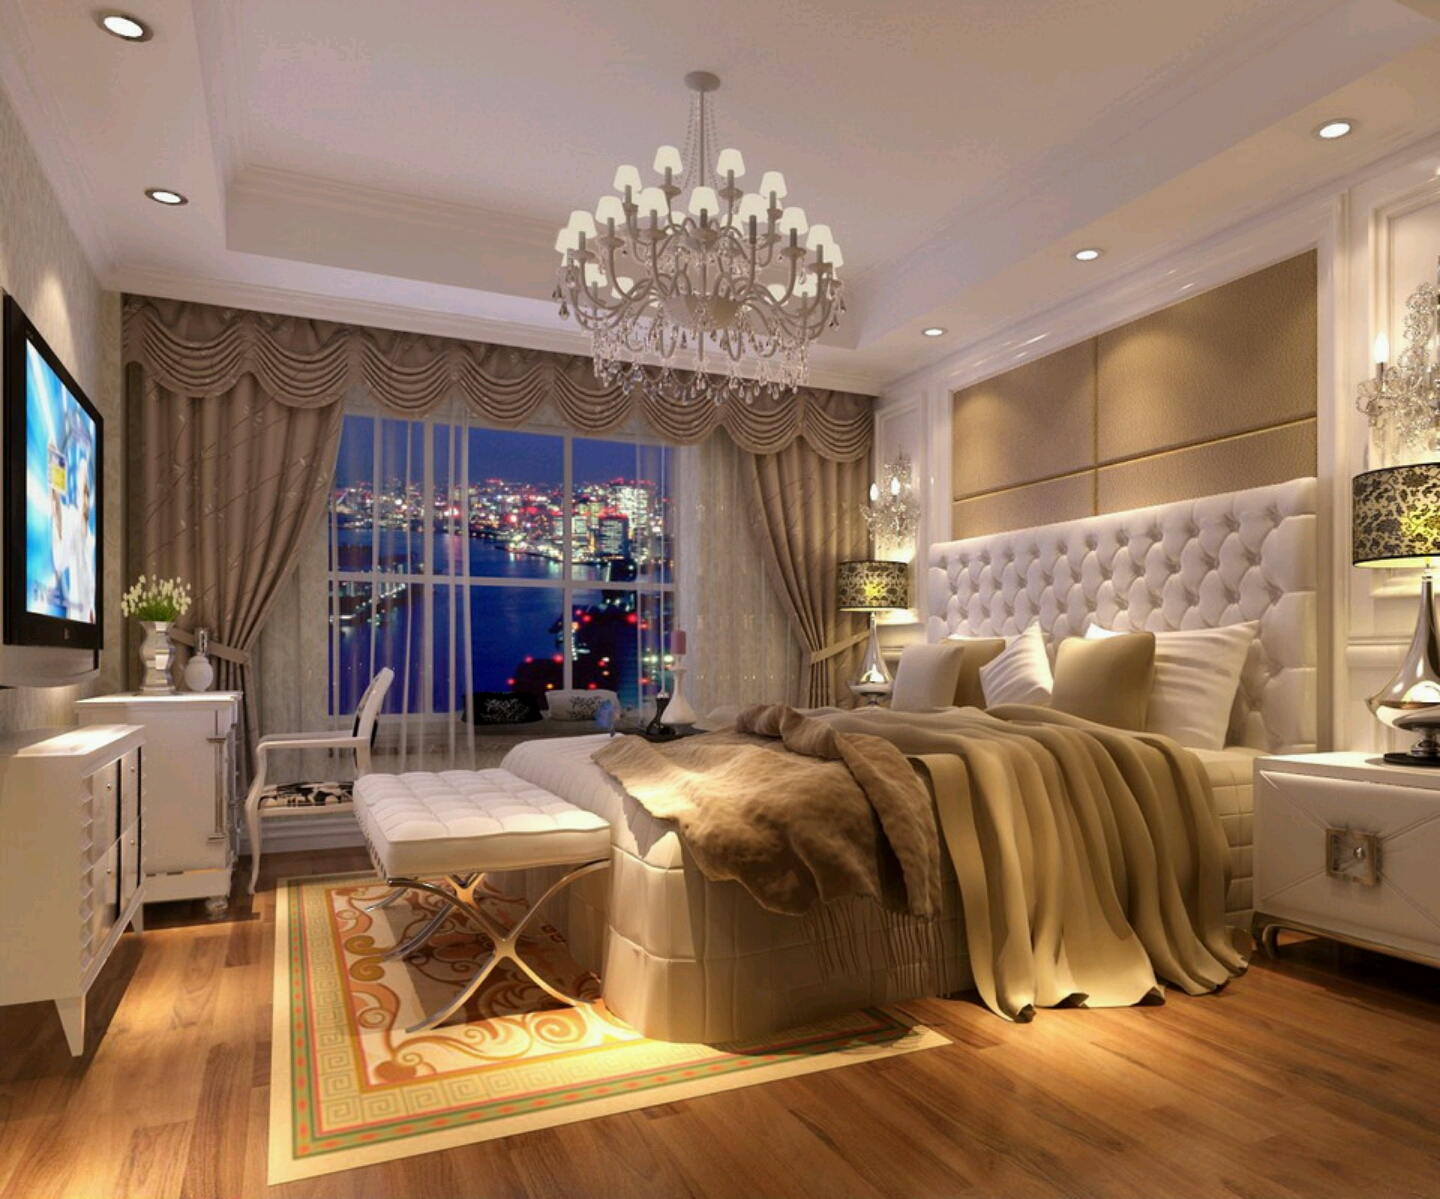 Desain Rumah Minimalis: Modern bedrooms designs ceiling designs ideas.